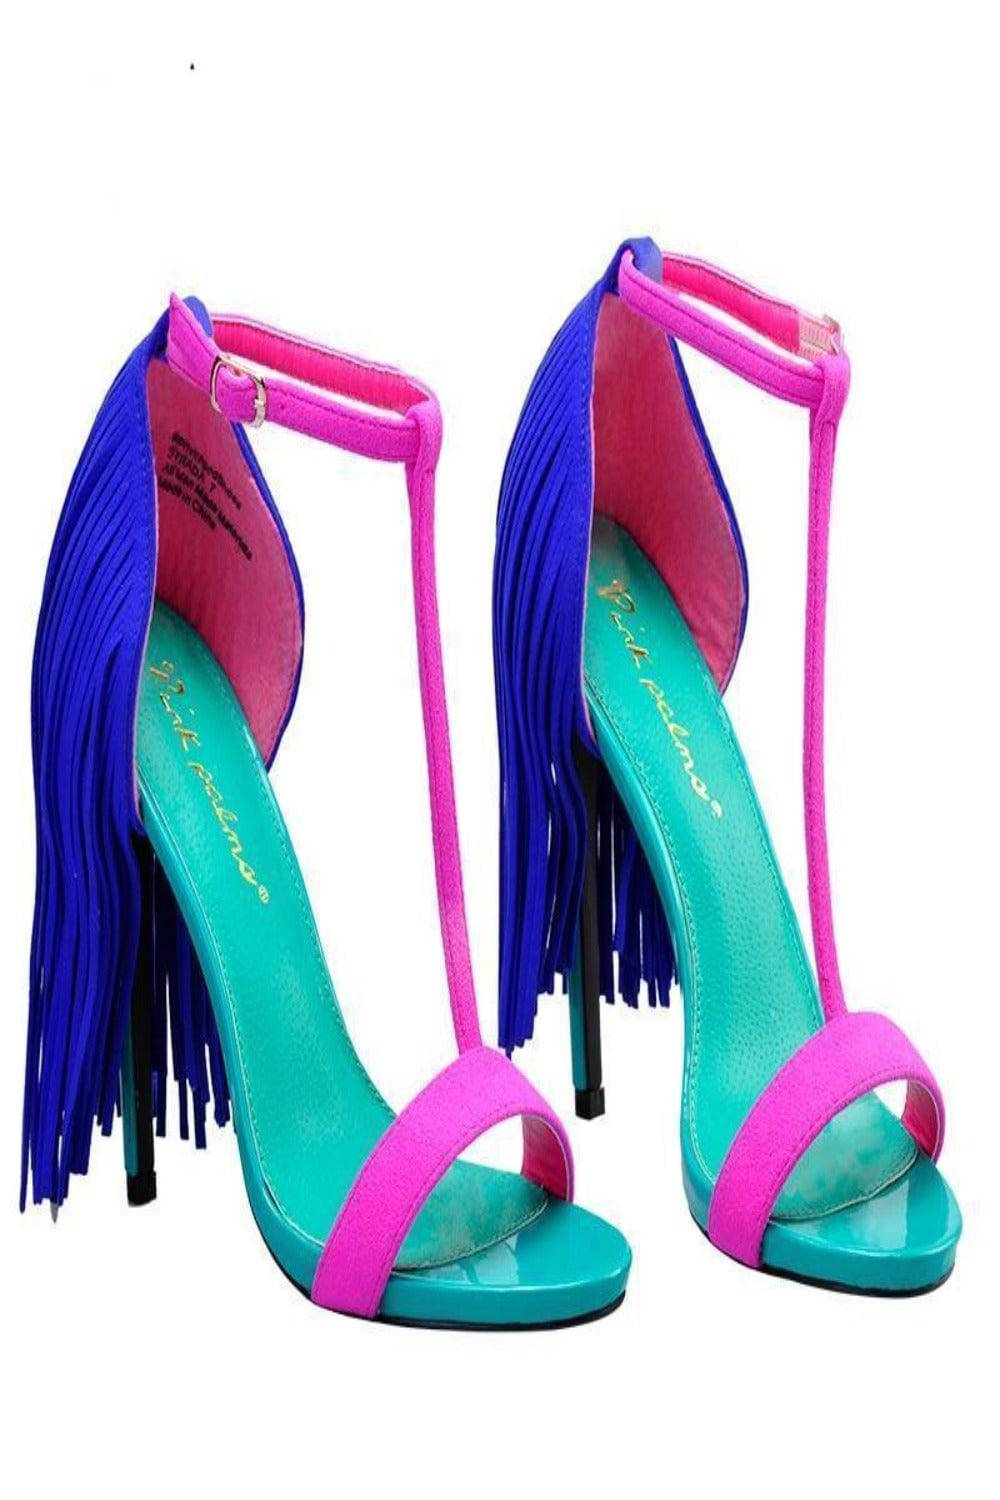 Lil Pop Blue Fringe High Heel Stiletto Sandals - TGC Boutique - High Heel Sandals